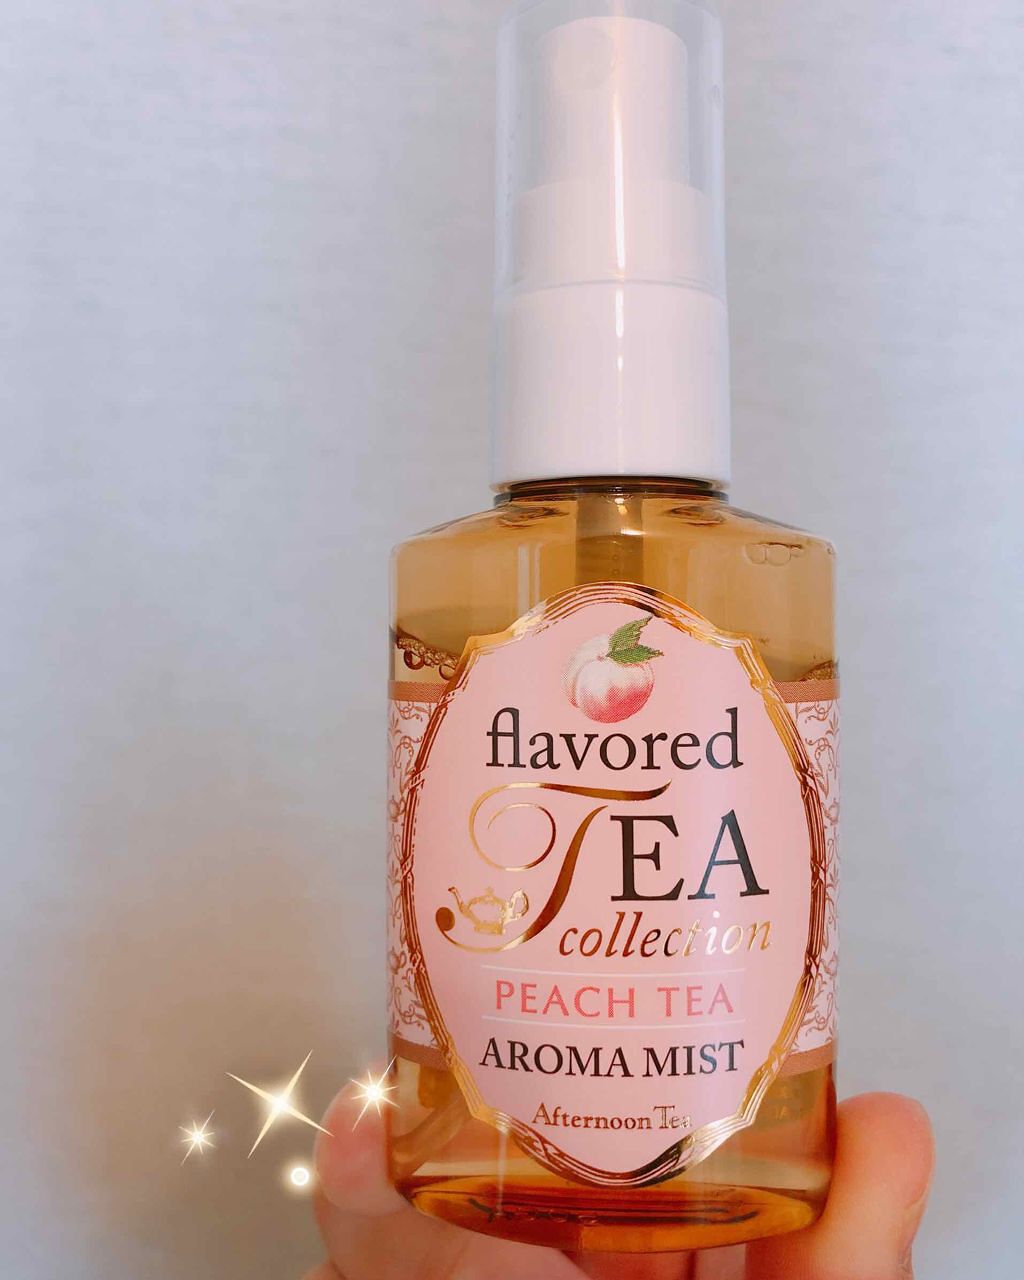 Afternoontea Flavored Tea Collection ピーチティー アロマミスト アフタヌーンティーのリアルな口コミ レビュー Lips